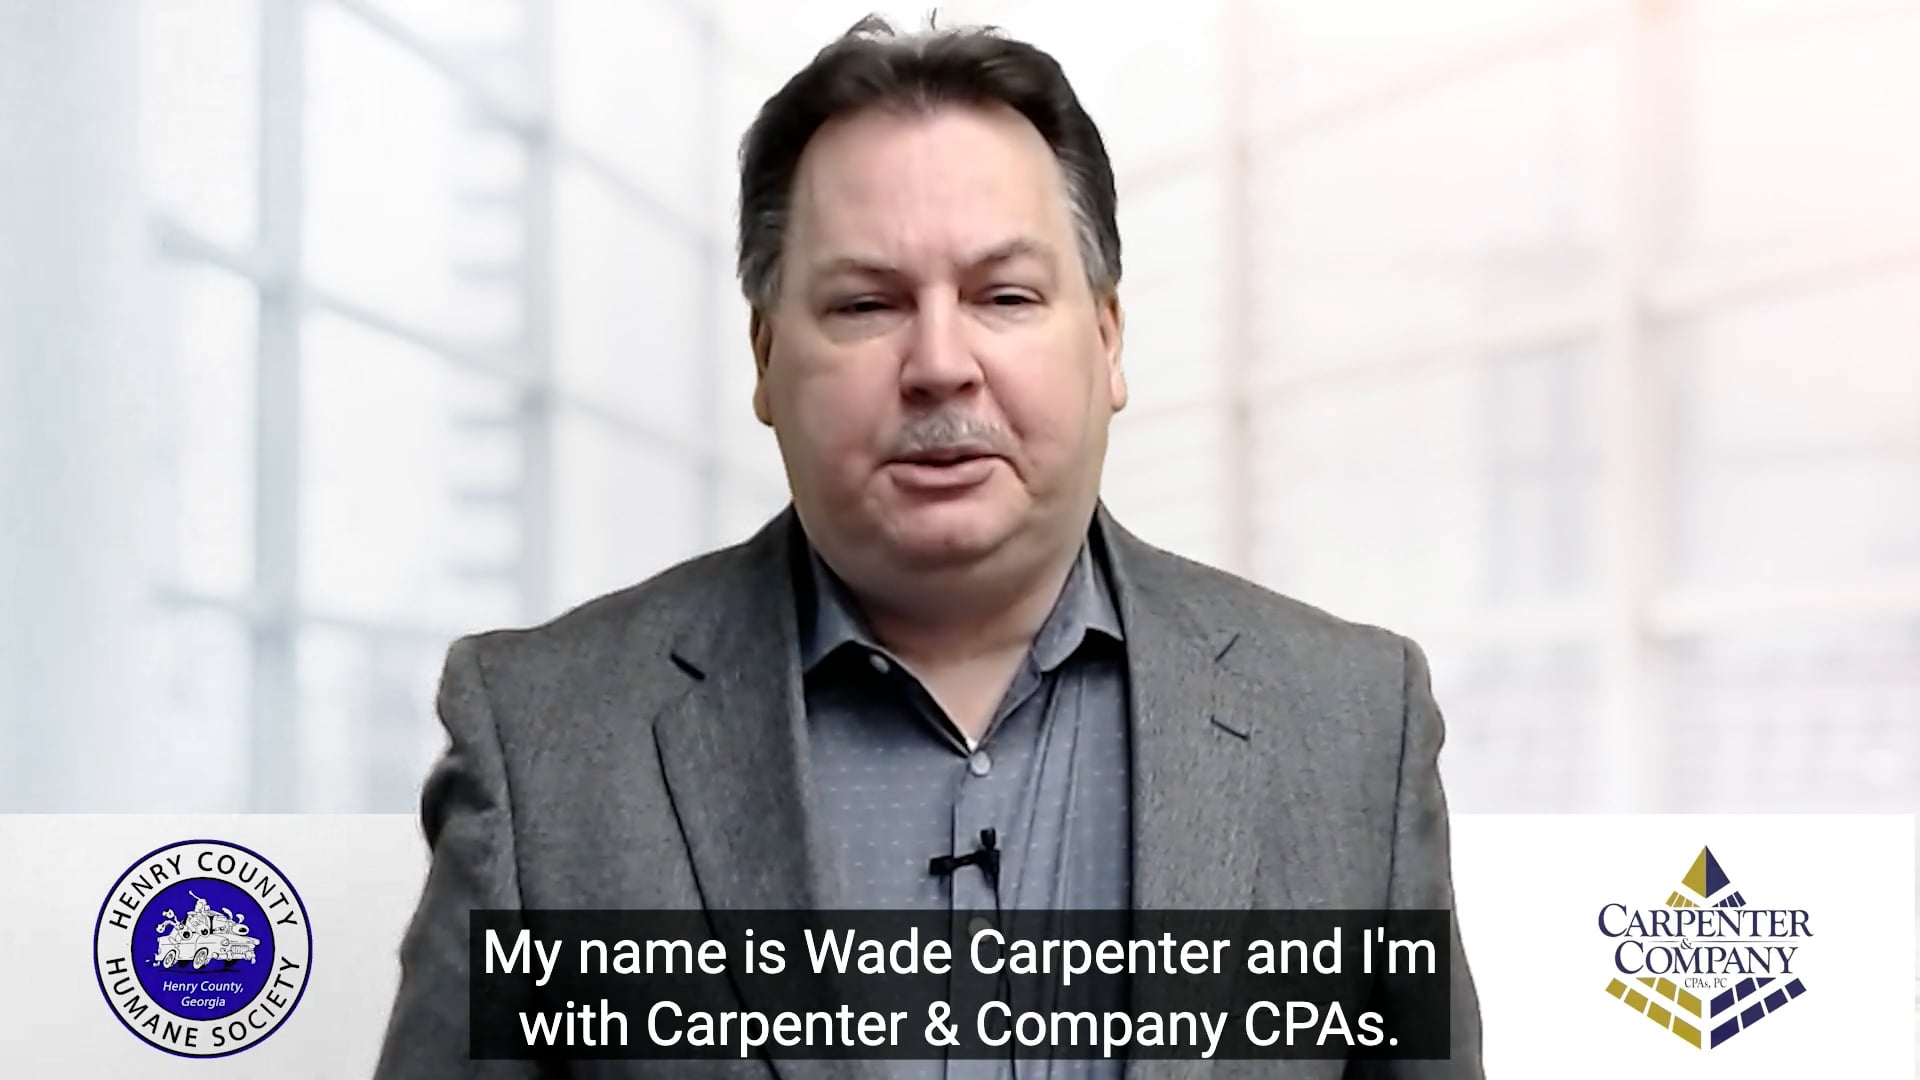 Find Fido Clue 3 Carpenter and Company CPAs mp4 on Vimeo